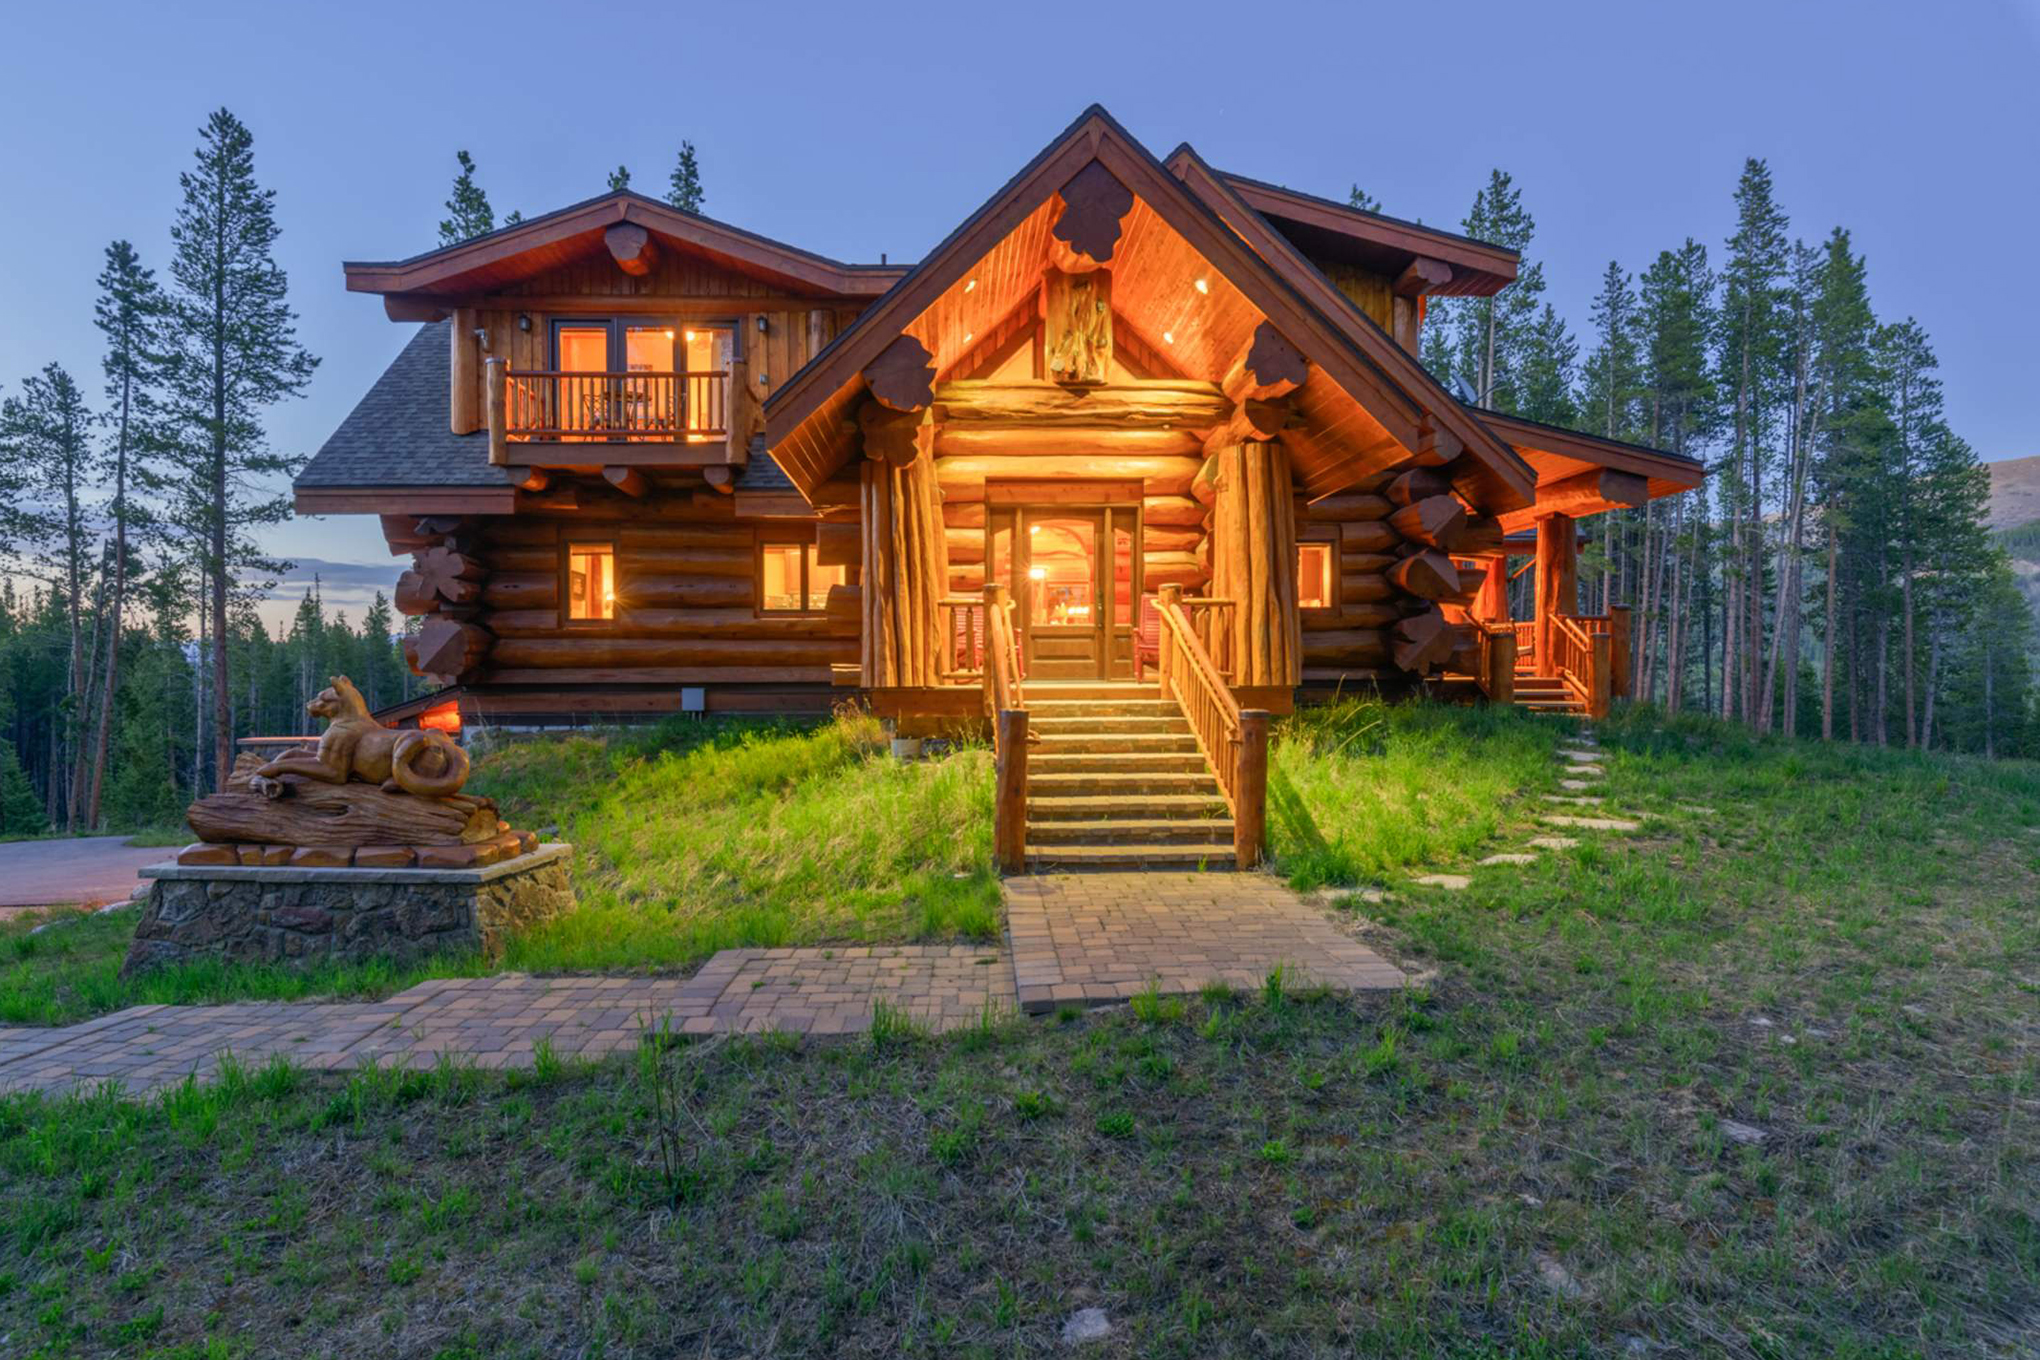 Colorado's 15 Best Luxury Log Cabin Rentals | InvitedHome